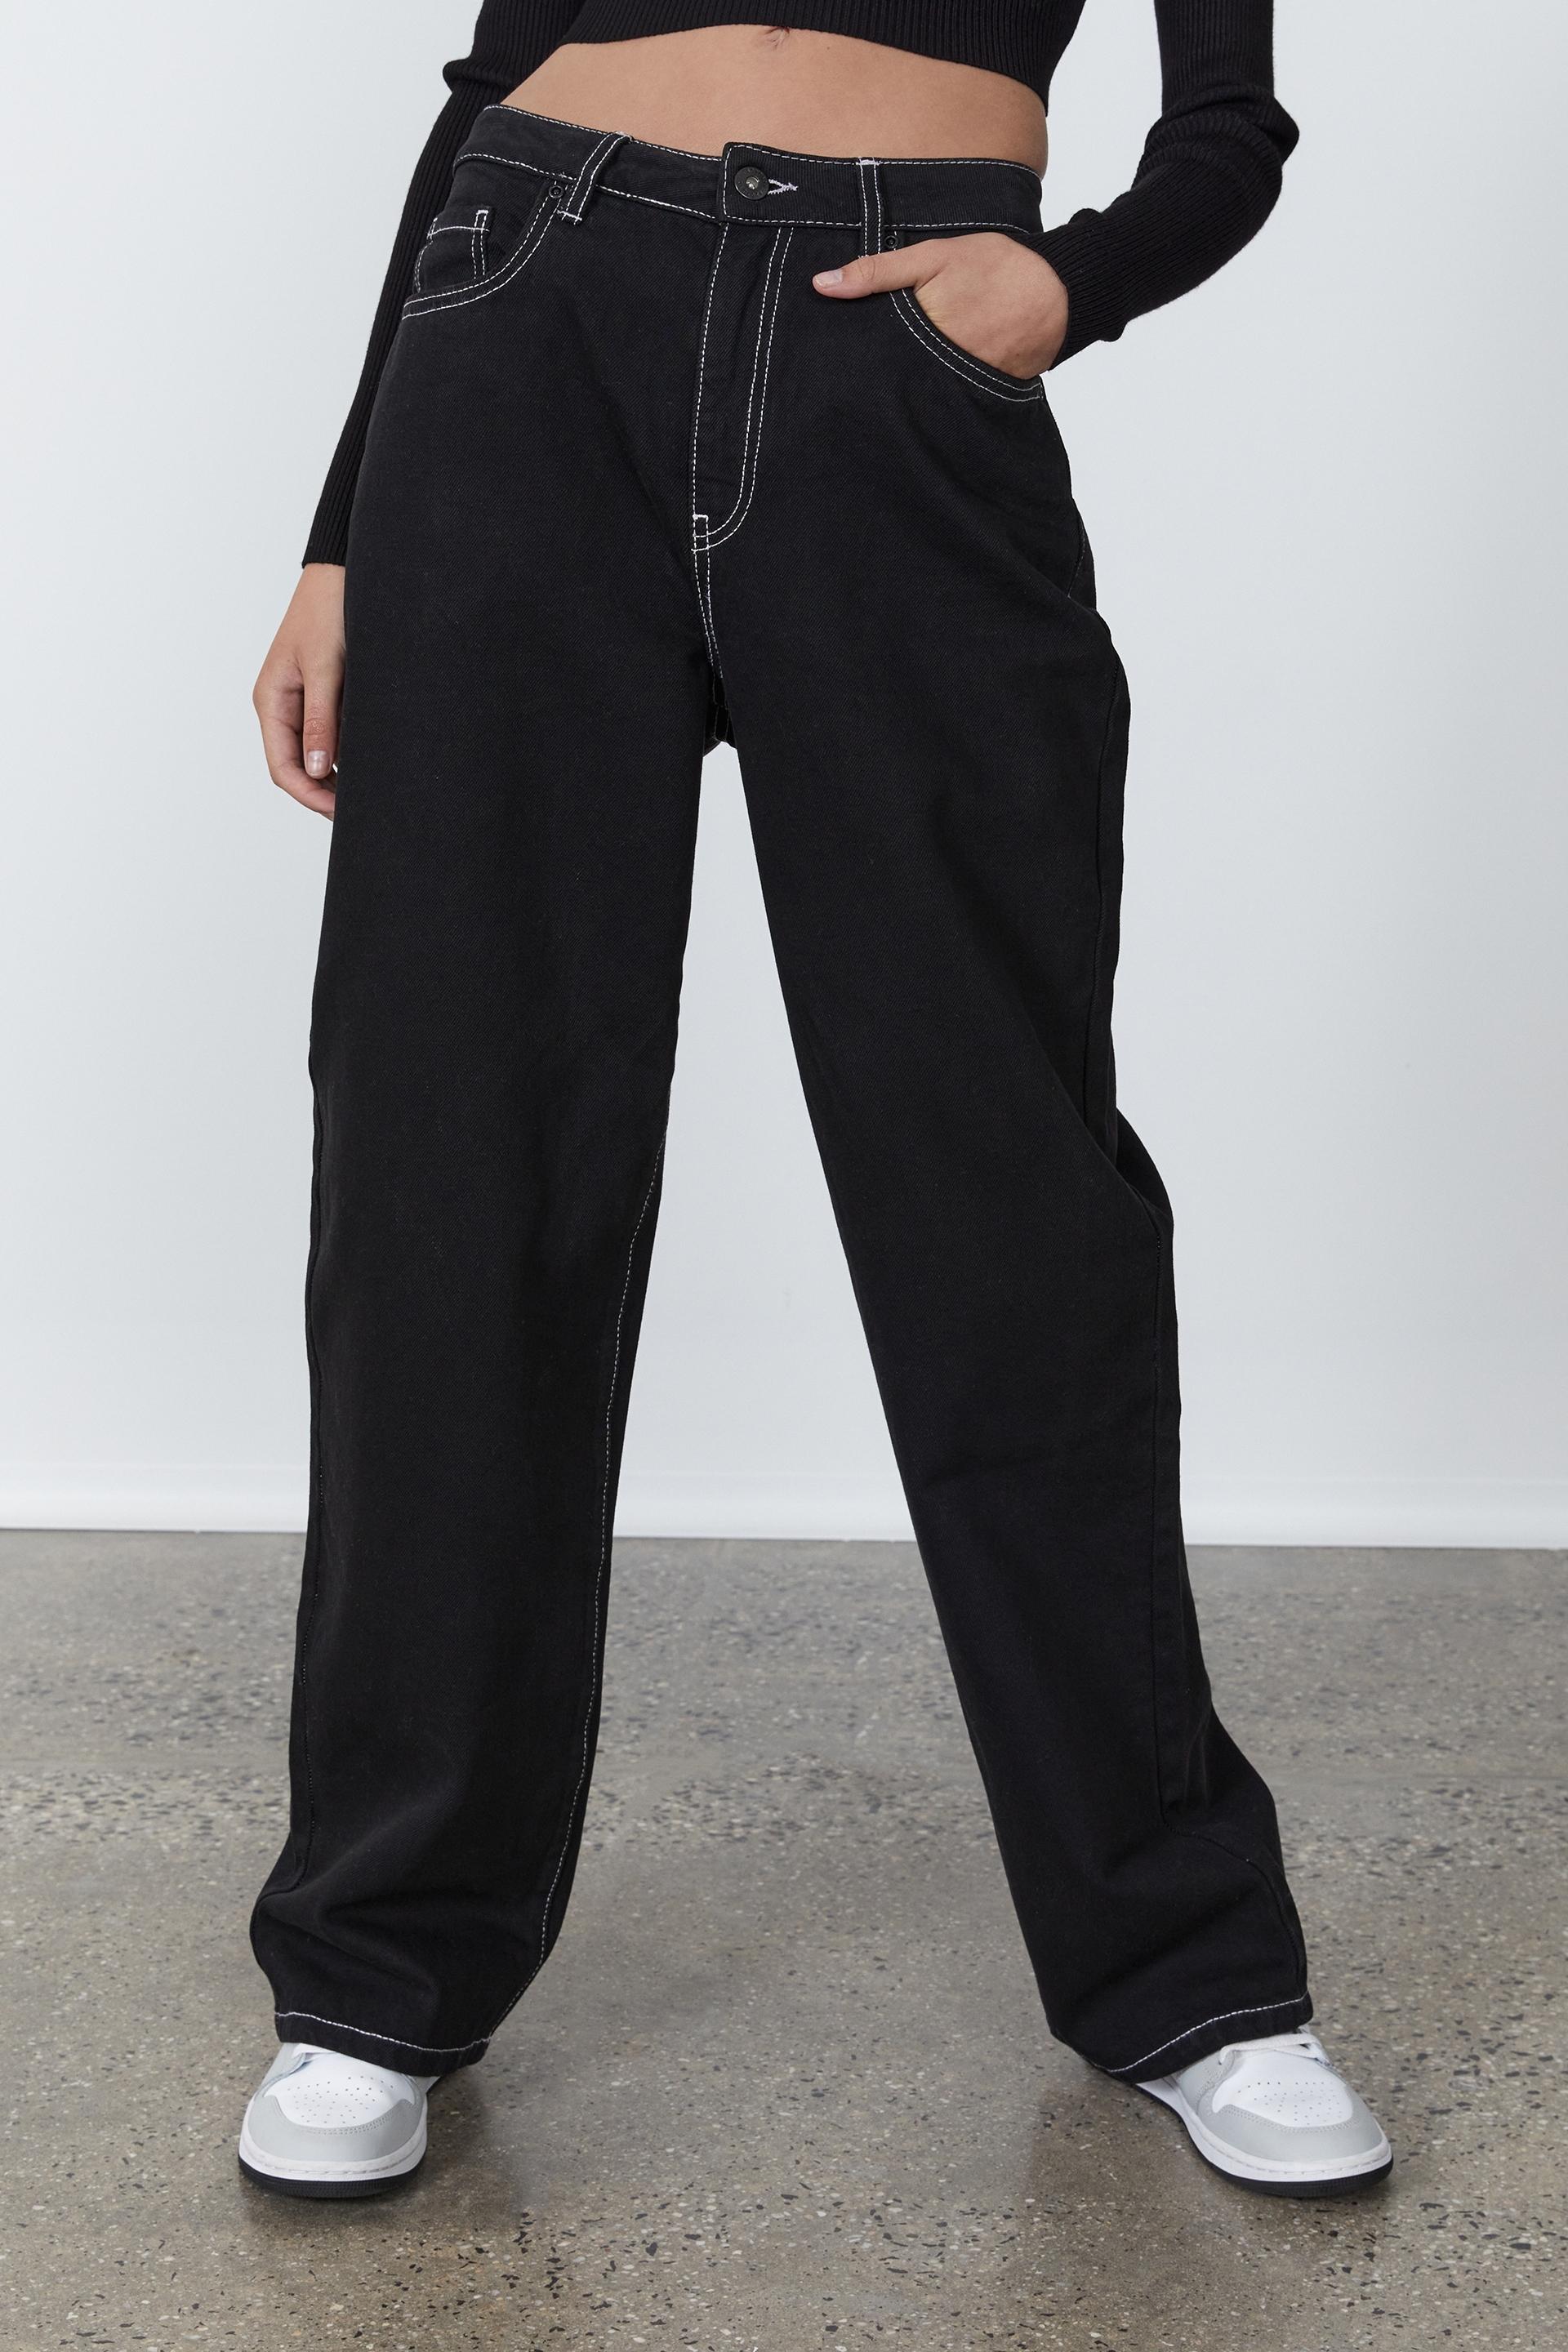 High rise baggy jean - black/white Factorie Jeans | Superbalist.com